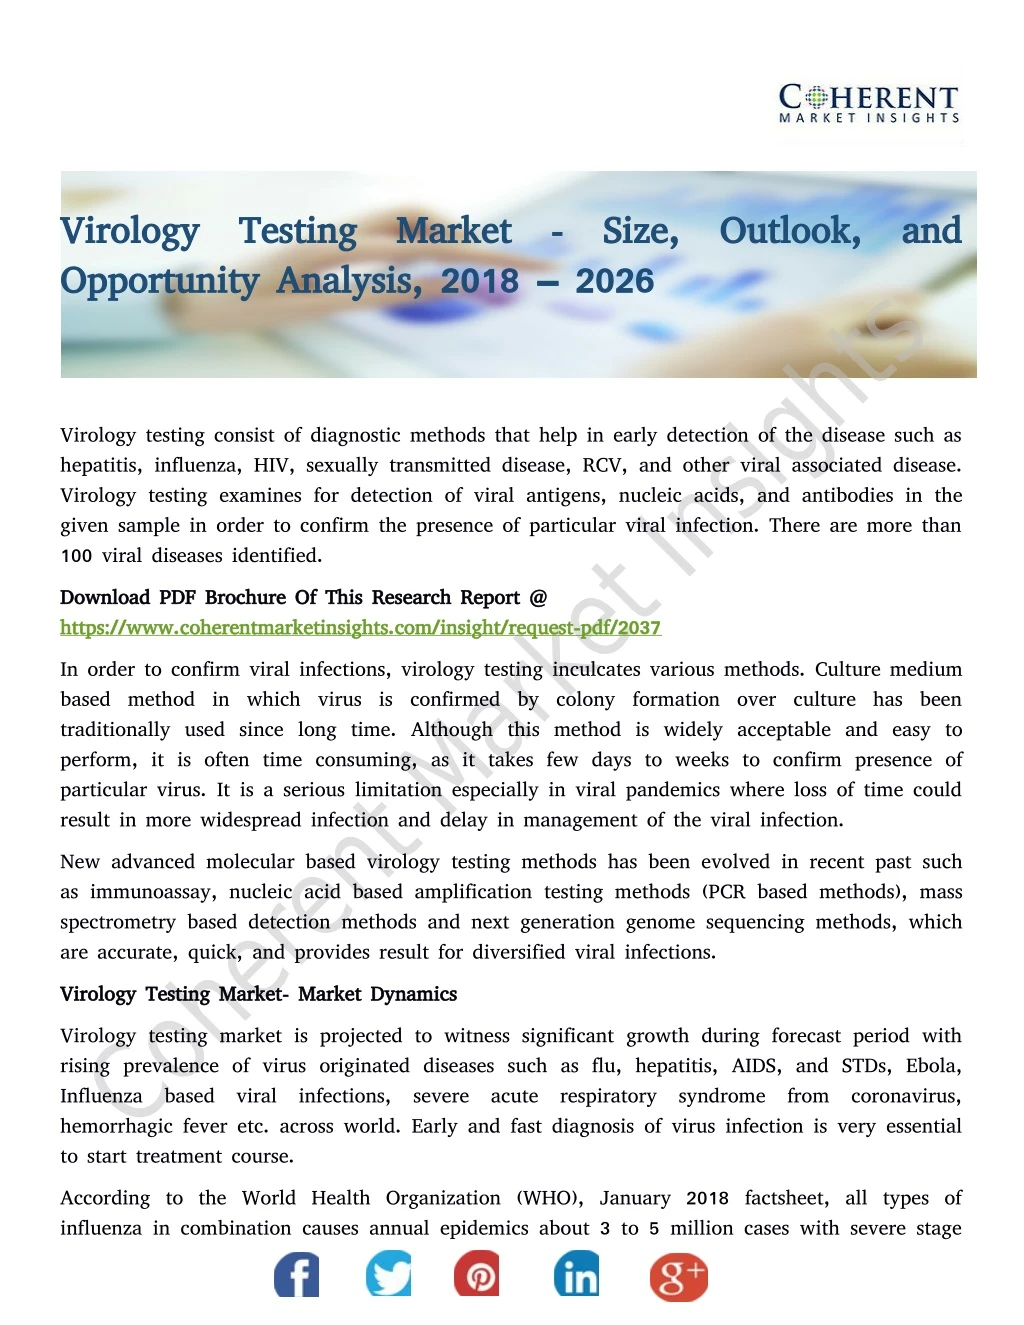 virology testing market size outlook and virology